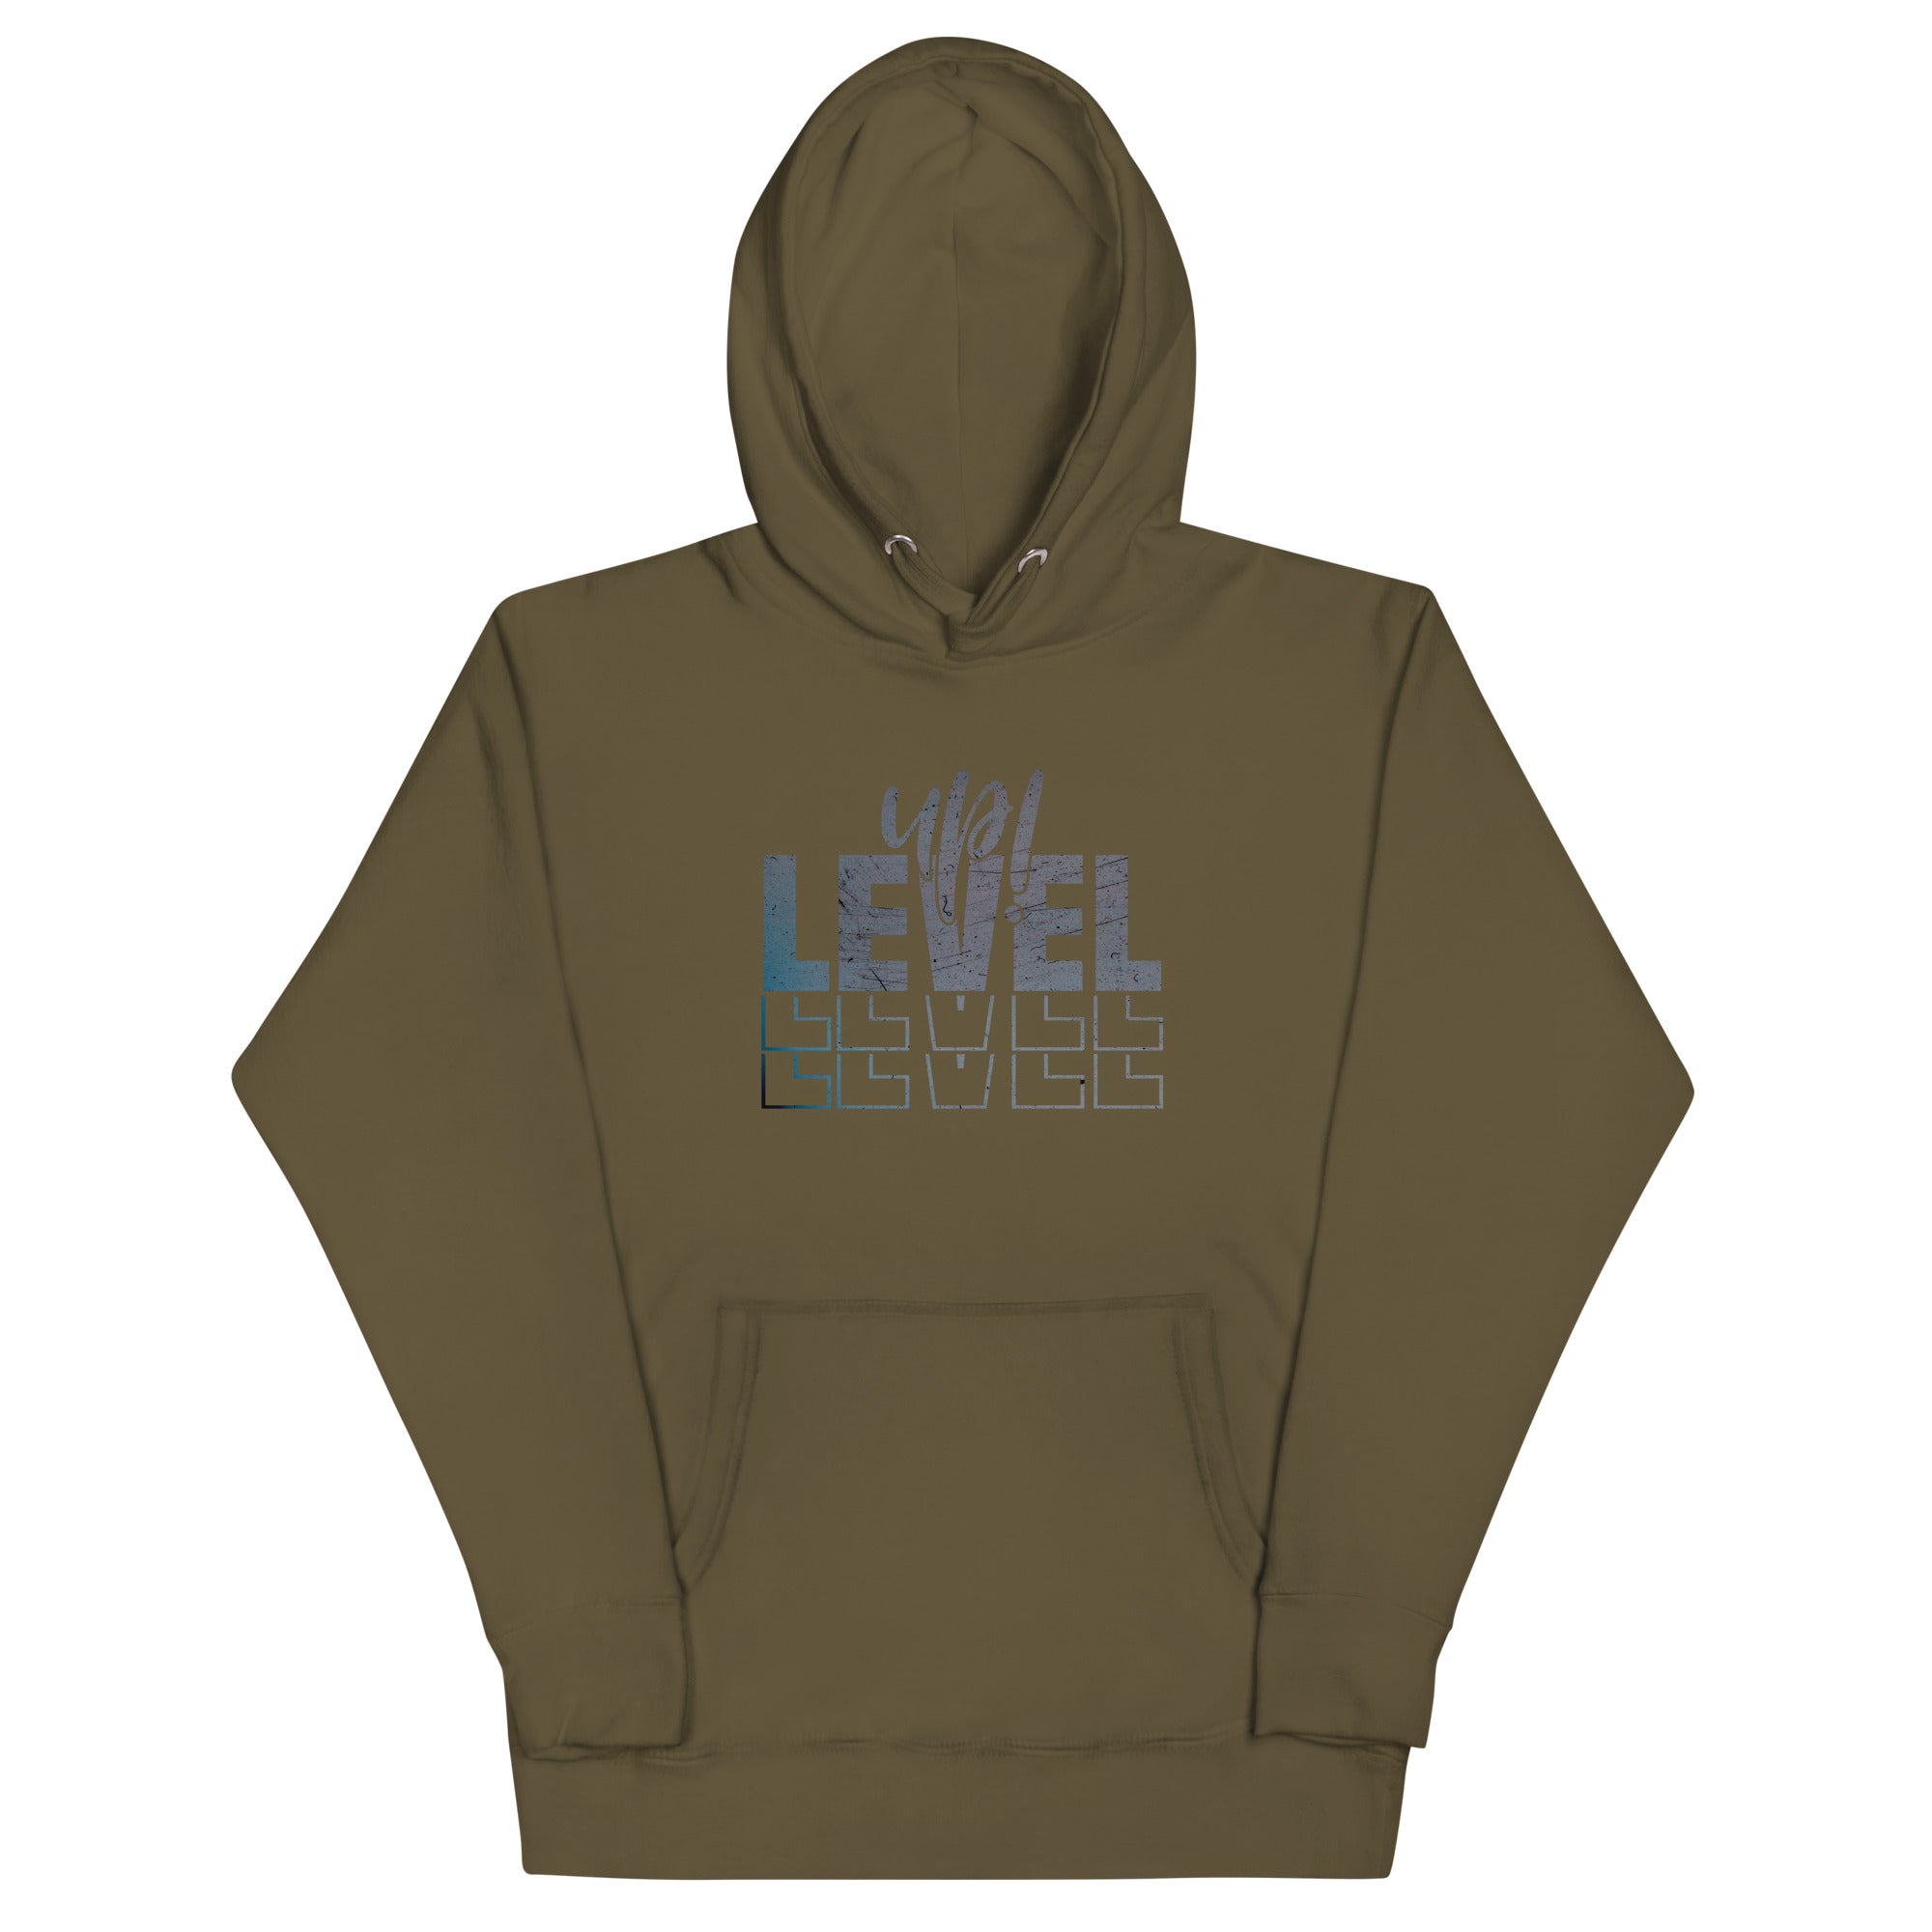 Unisex Hoodie | Level Up